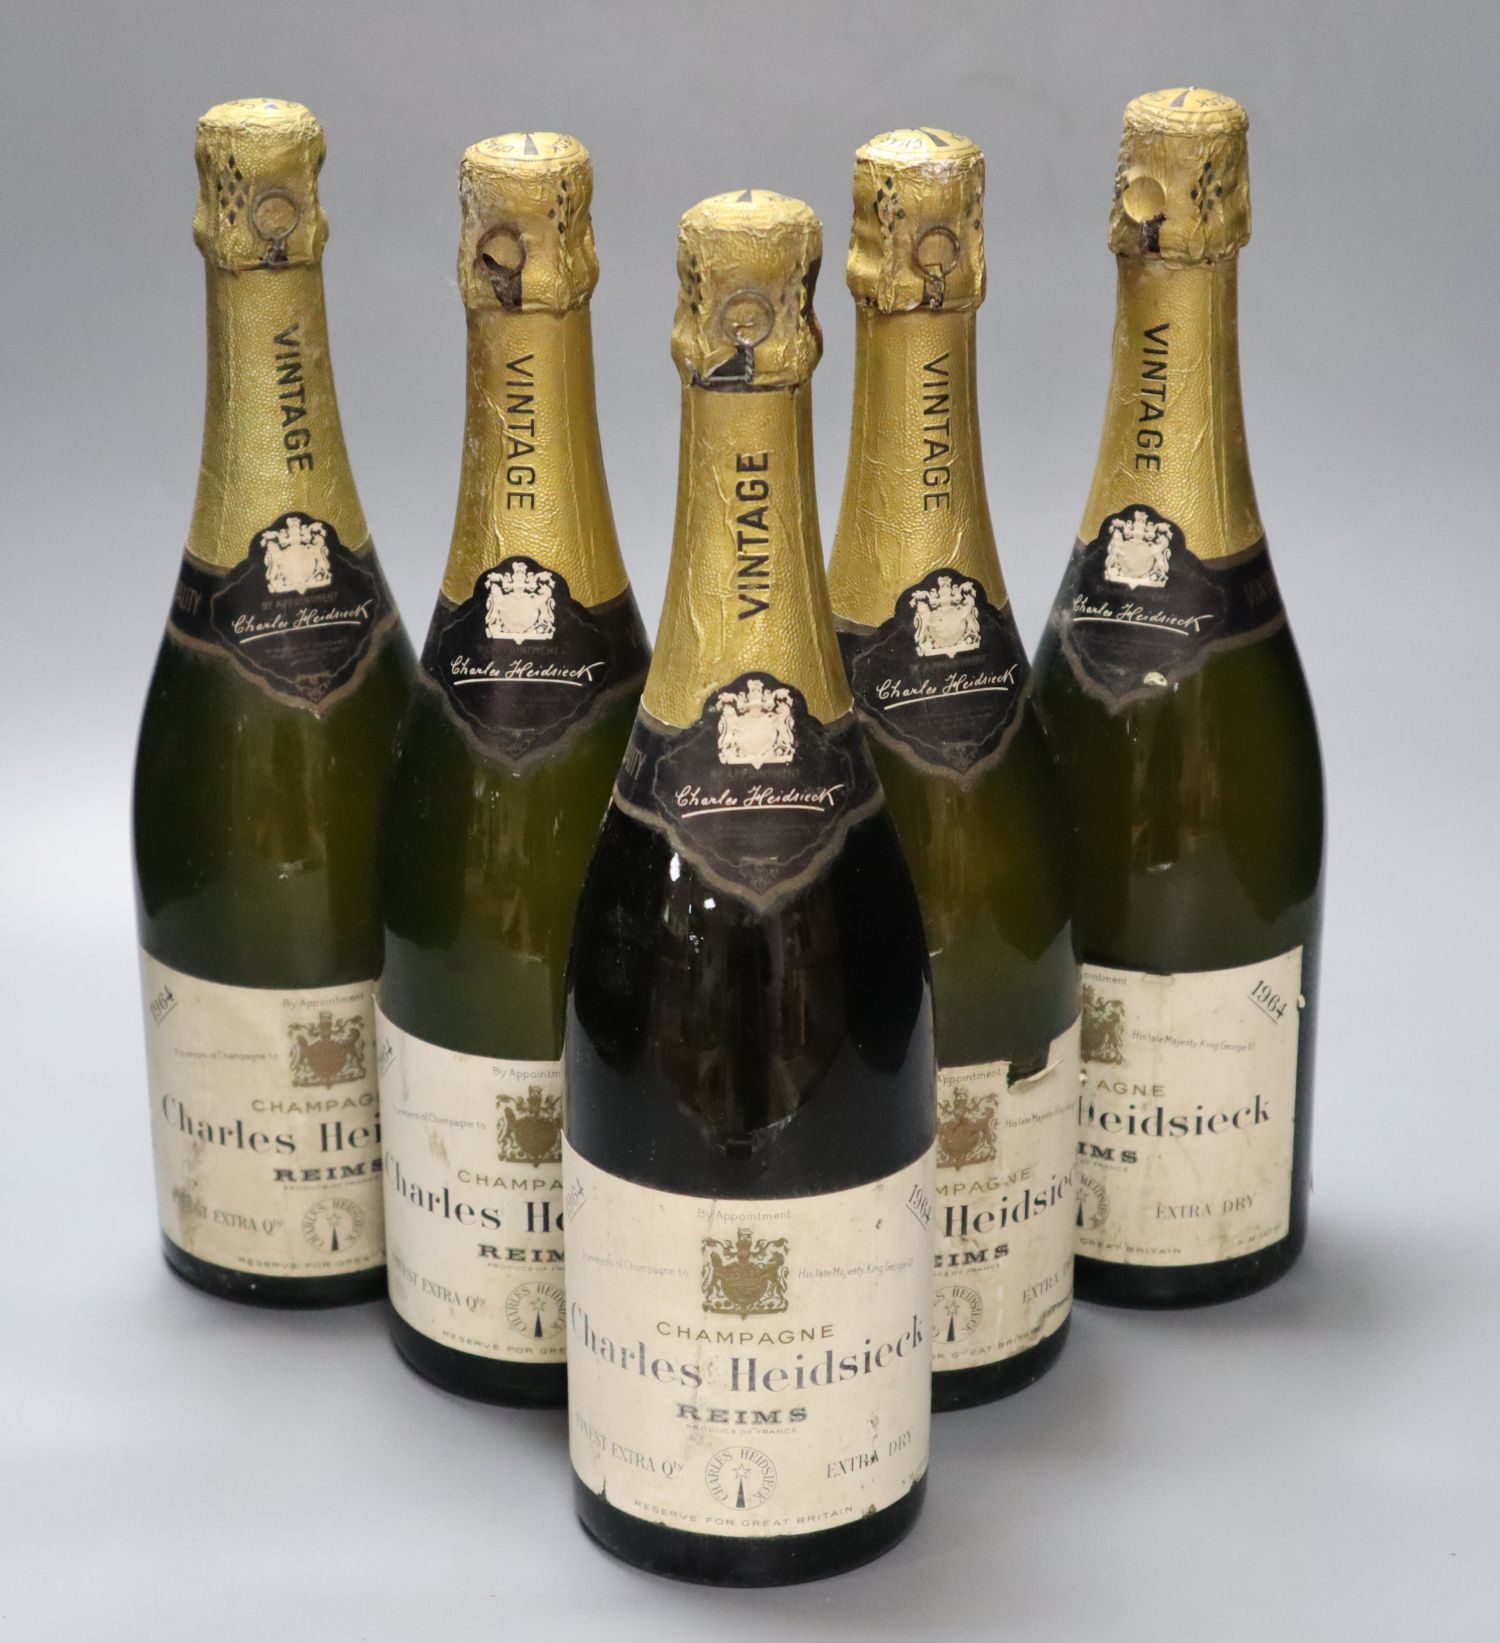 Five bottles of Charles Heidsieck 1964 vintage champagne